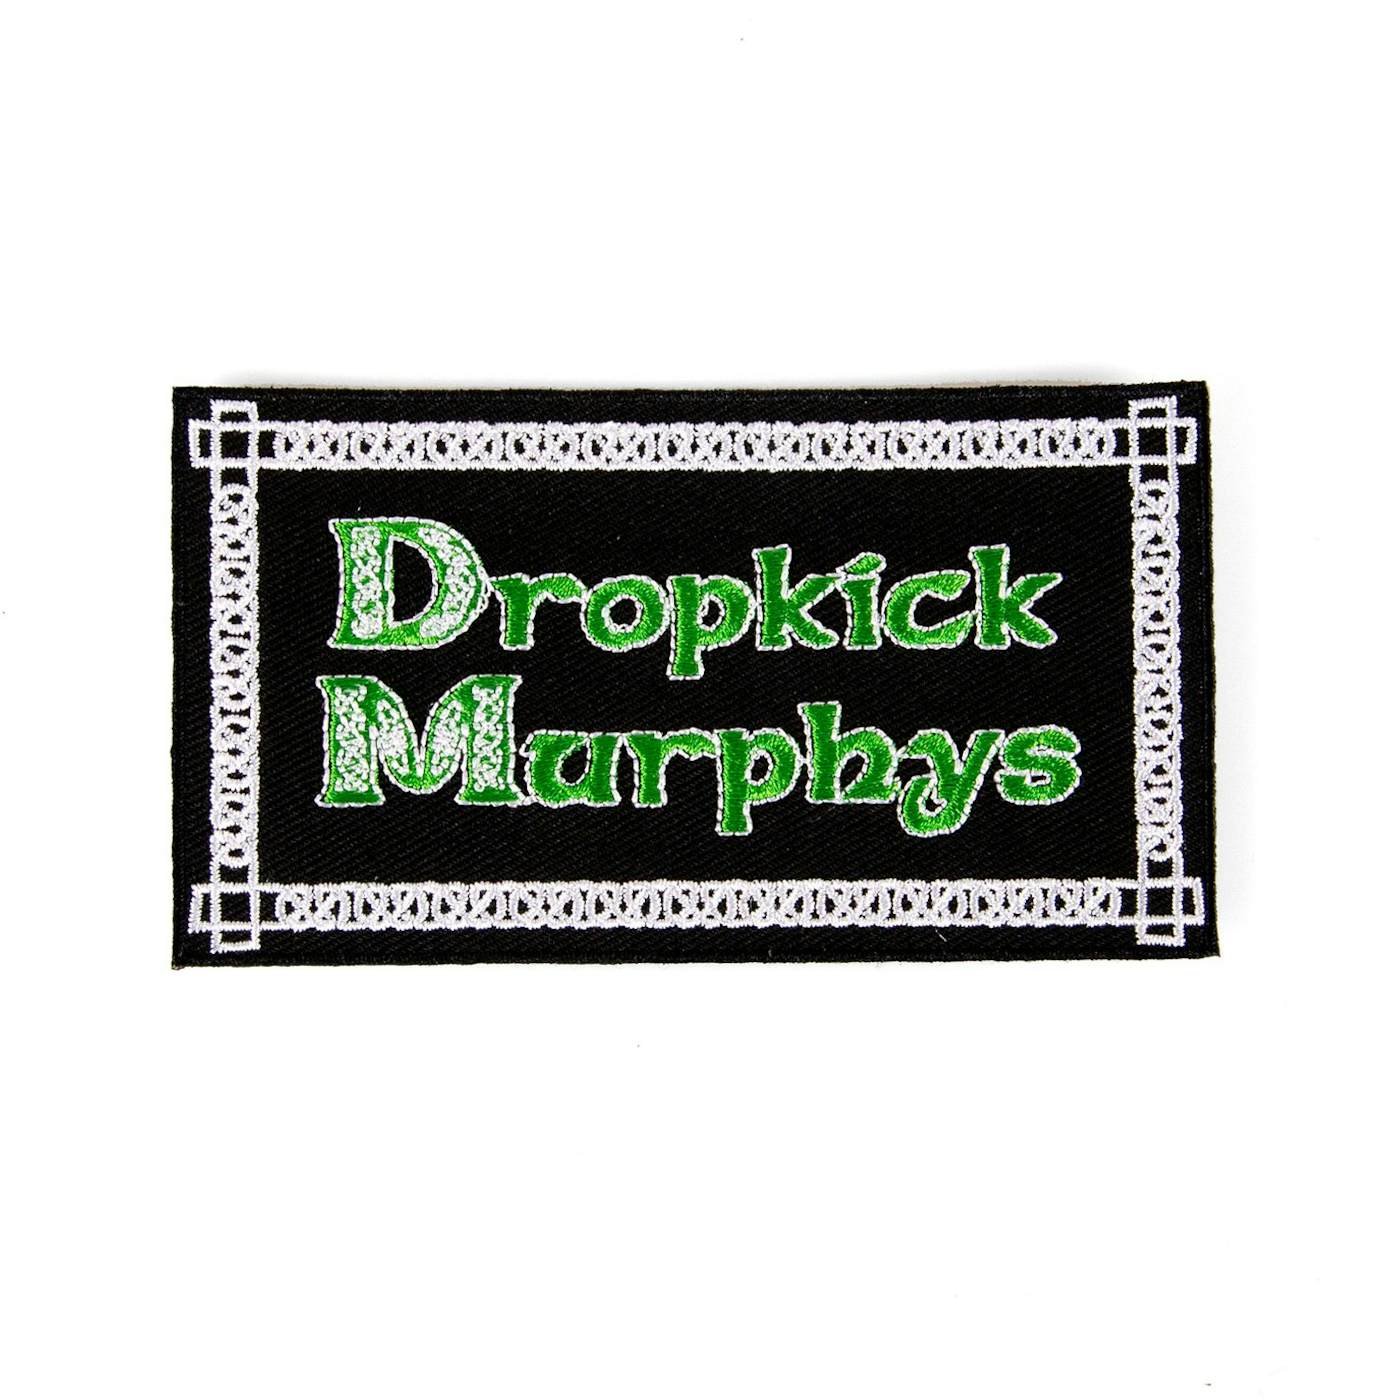 Dropkick Murphys Shirts, Dropkick Murphys Merch, Dropkick Murphys Hoodies, Dropkick  Murphys Vinyl Records, Dropkick Murphys Posters, Dropkick Murphys Hats, Dropkick  Murphys CDs, Dropkick Murphys Music, Dropkick Murphys Merch Store